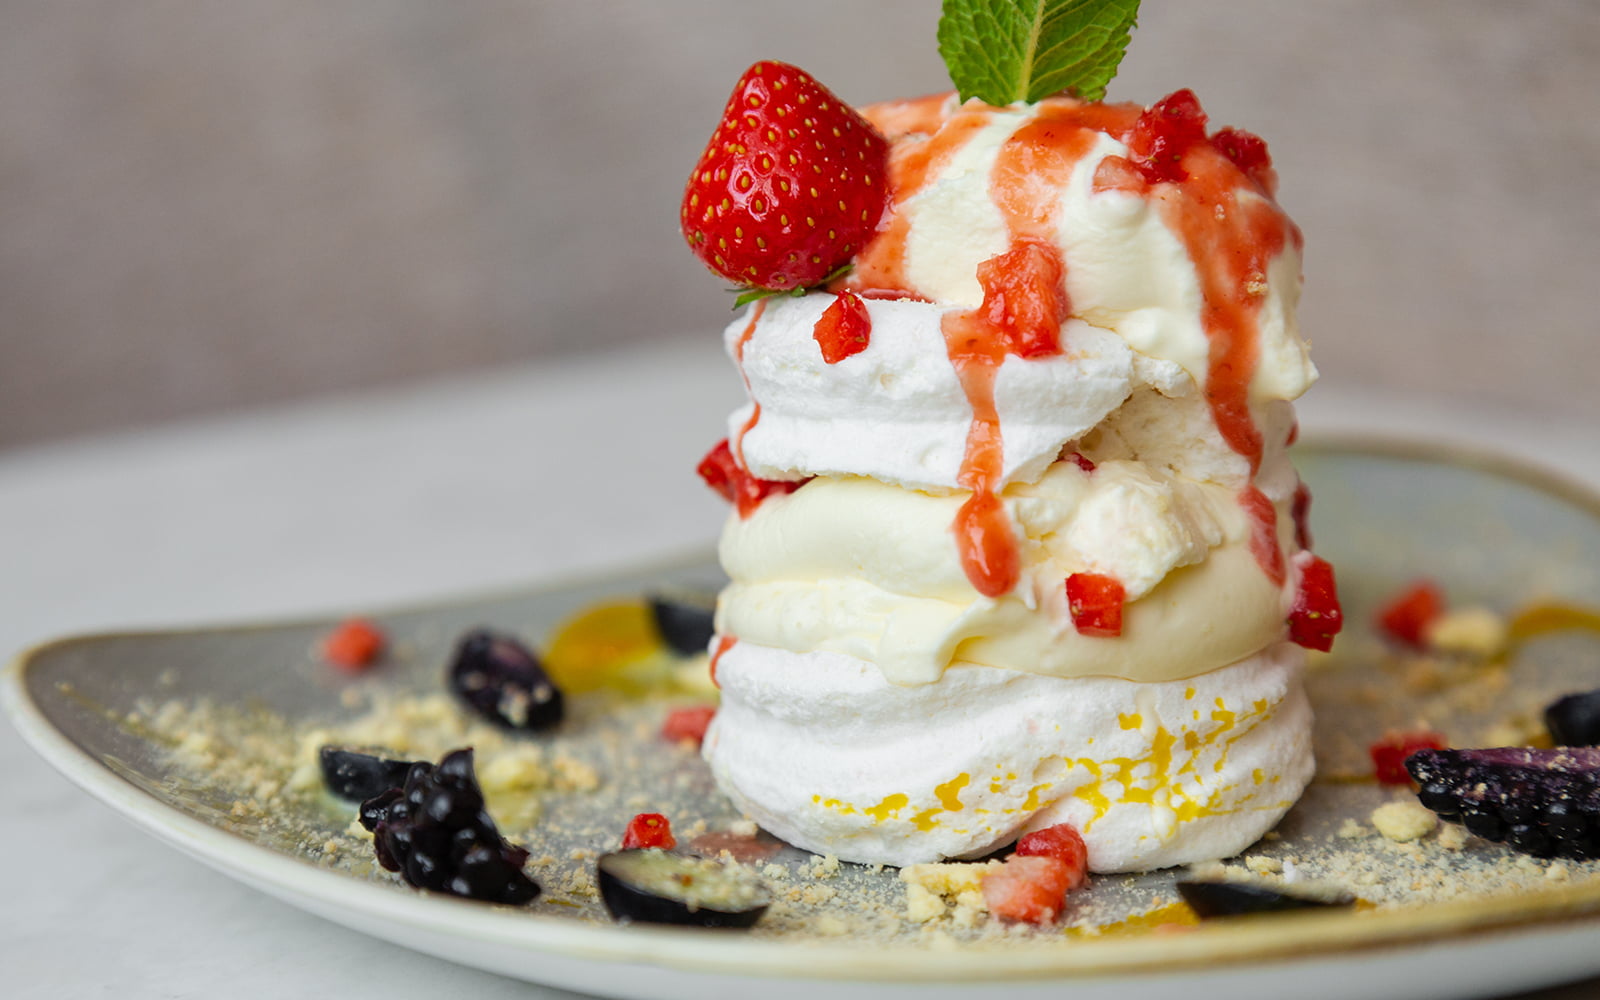 delicious meringue and cream dessert with berries